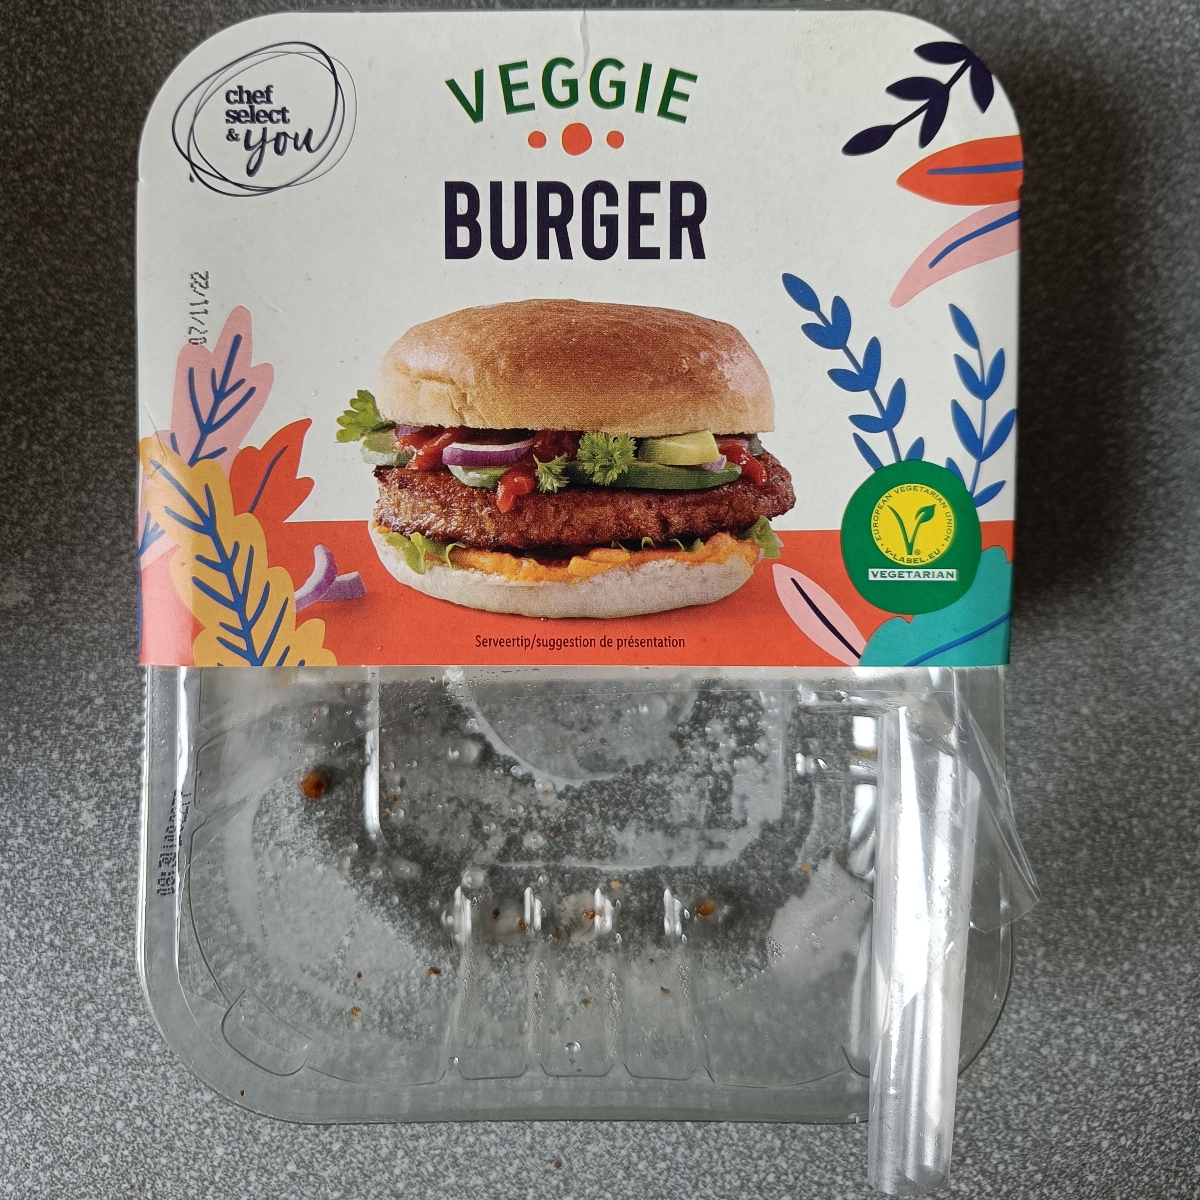 veggie chef select & you veggie burger Reviews | abillion